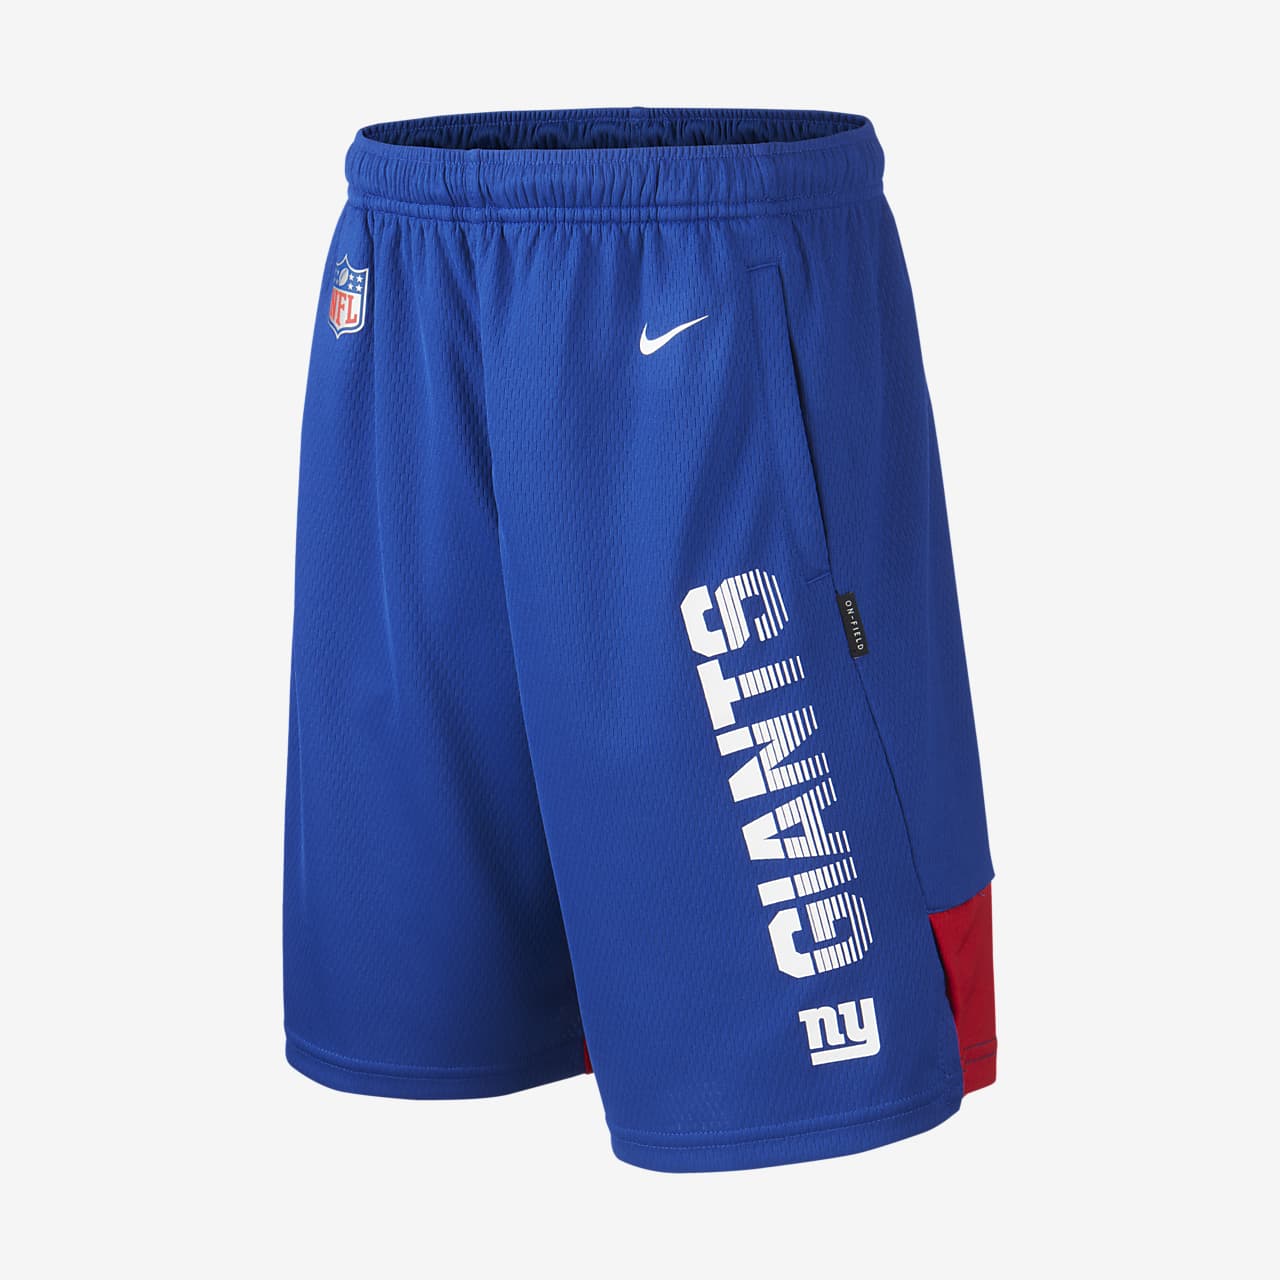 NFL Giants) Older Kids' Shorts. Nike NL